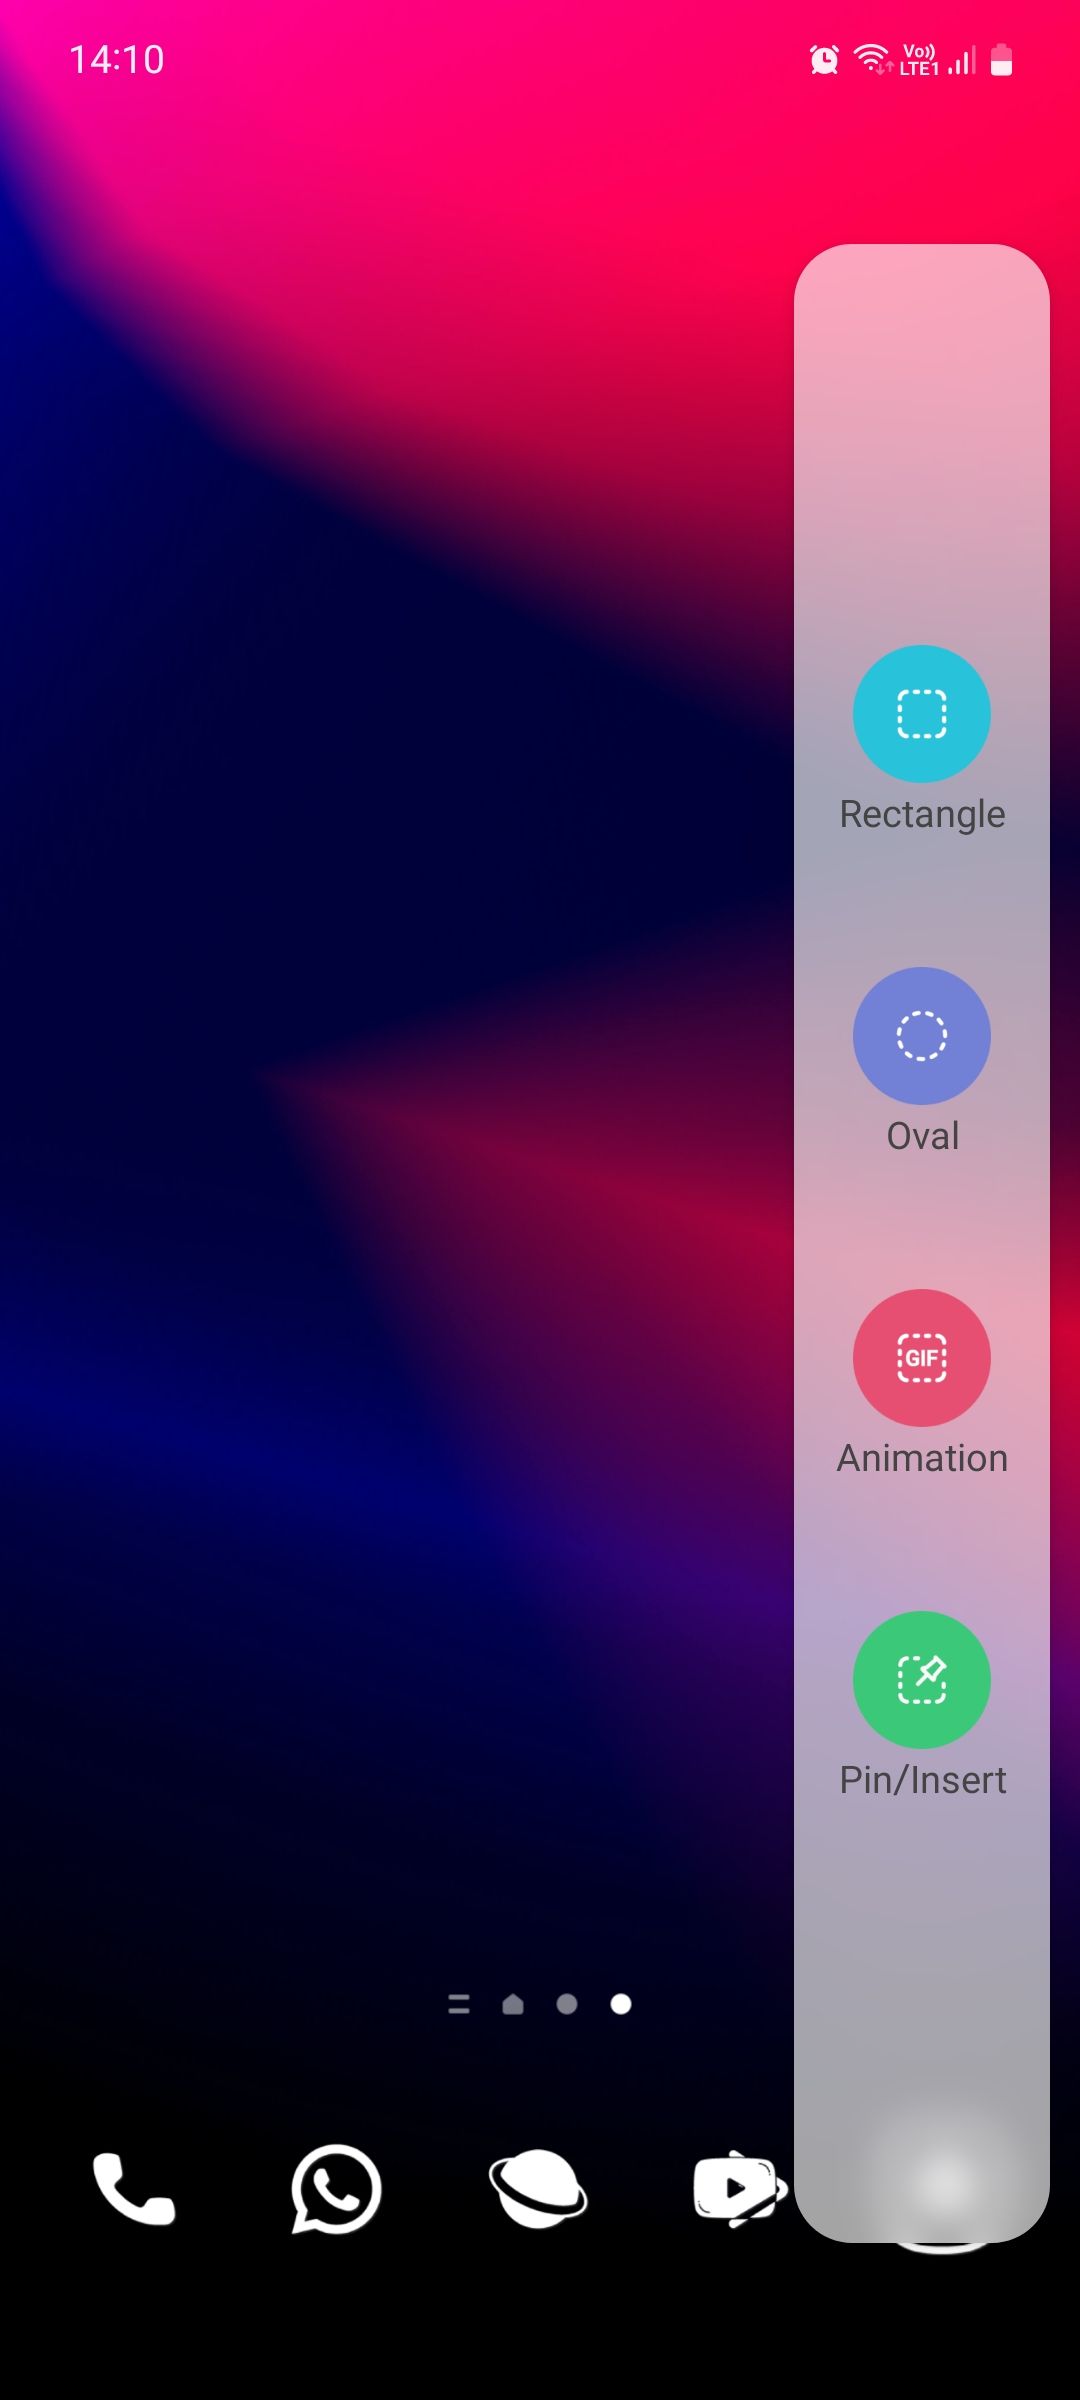 Samsung One UI Smart select edge panel shown on Home screen